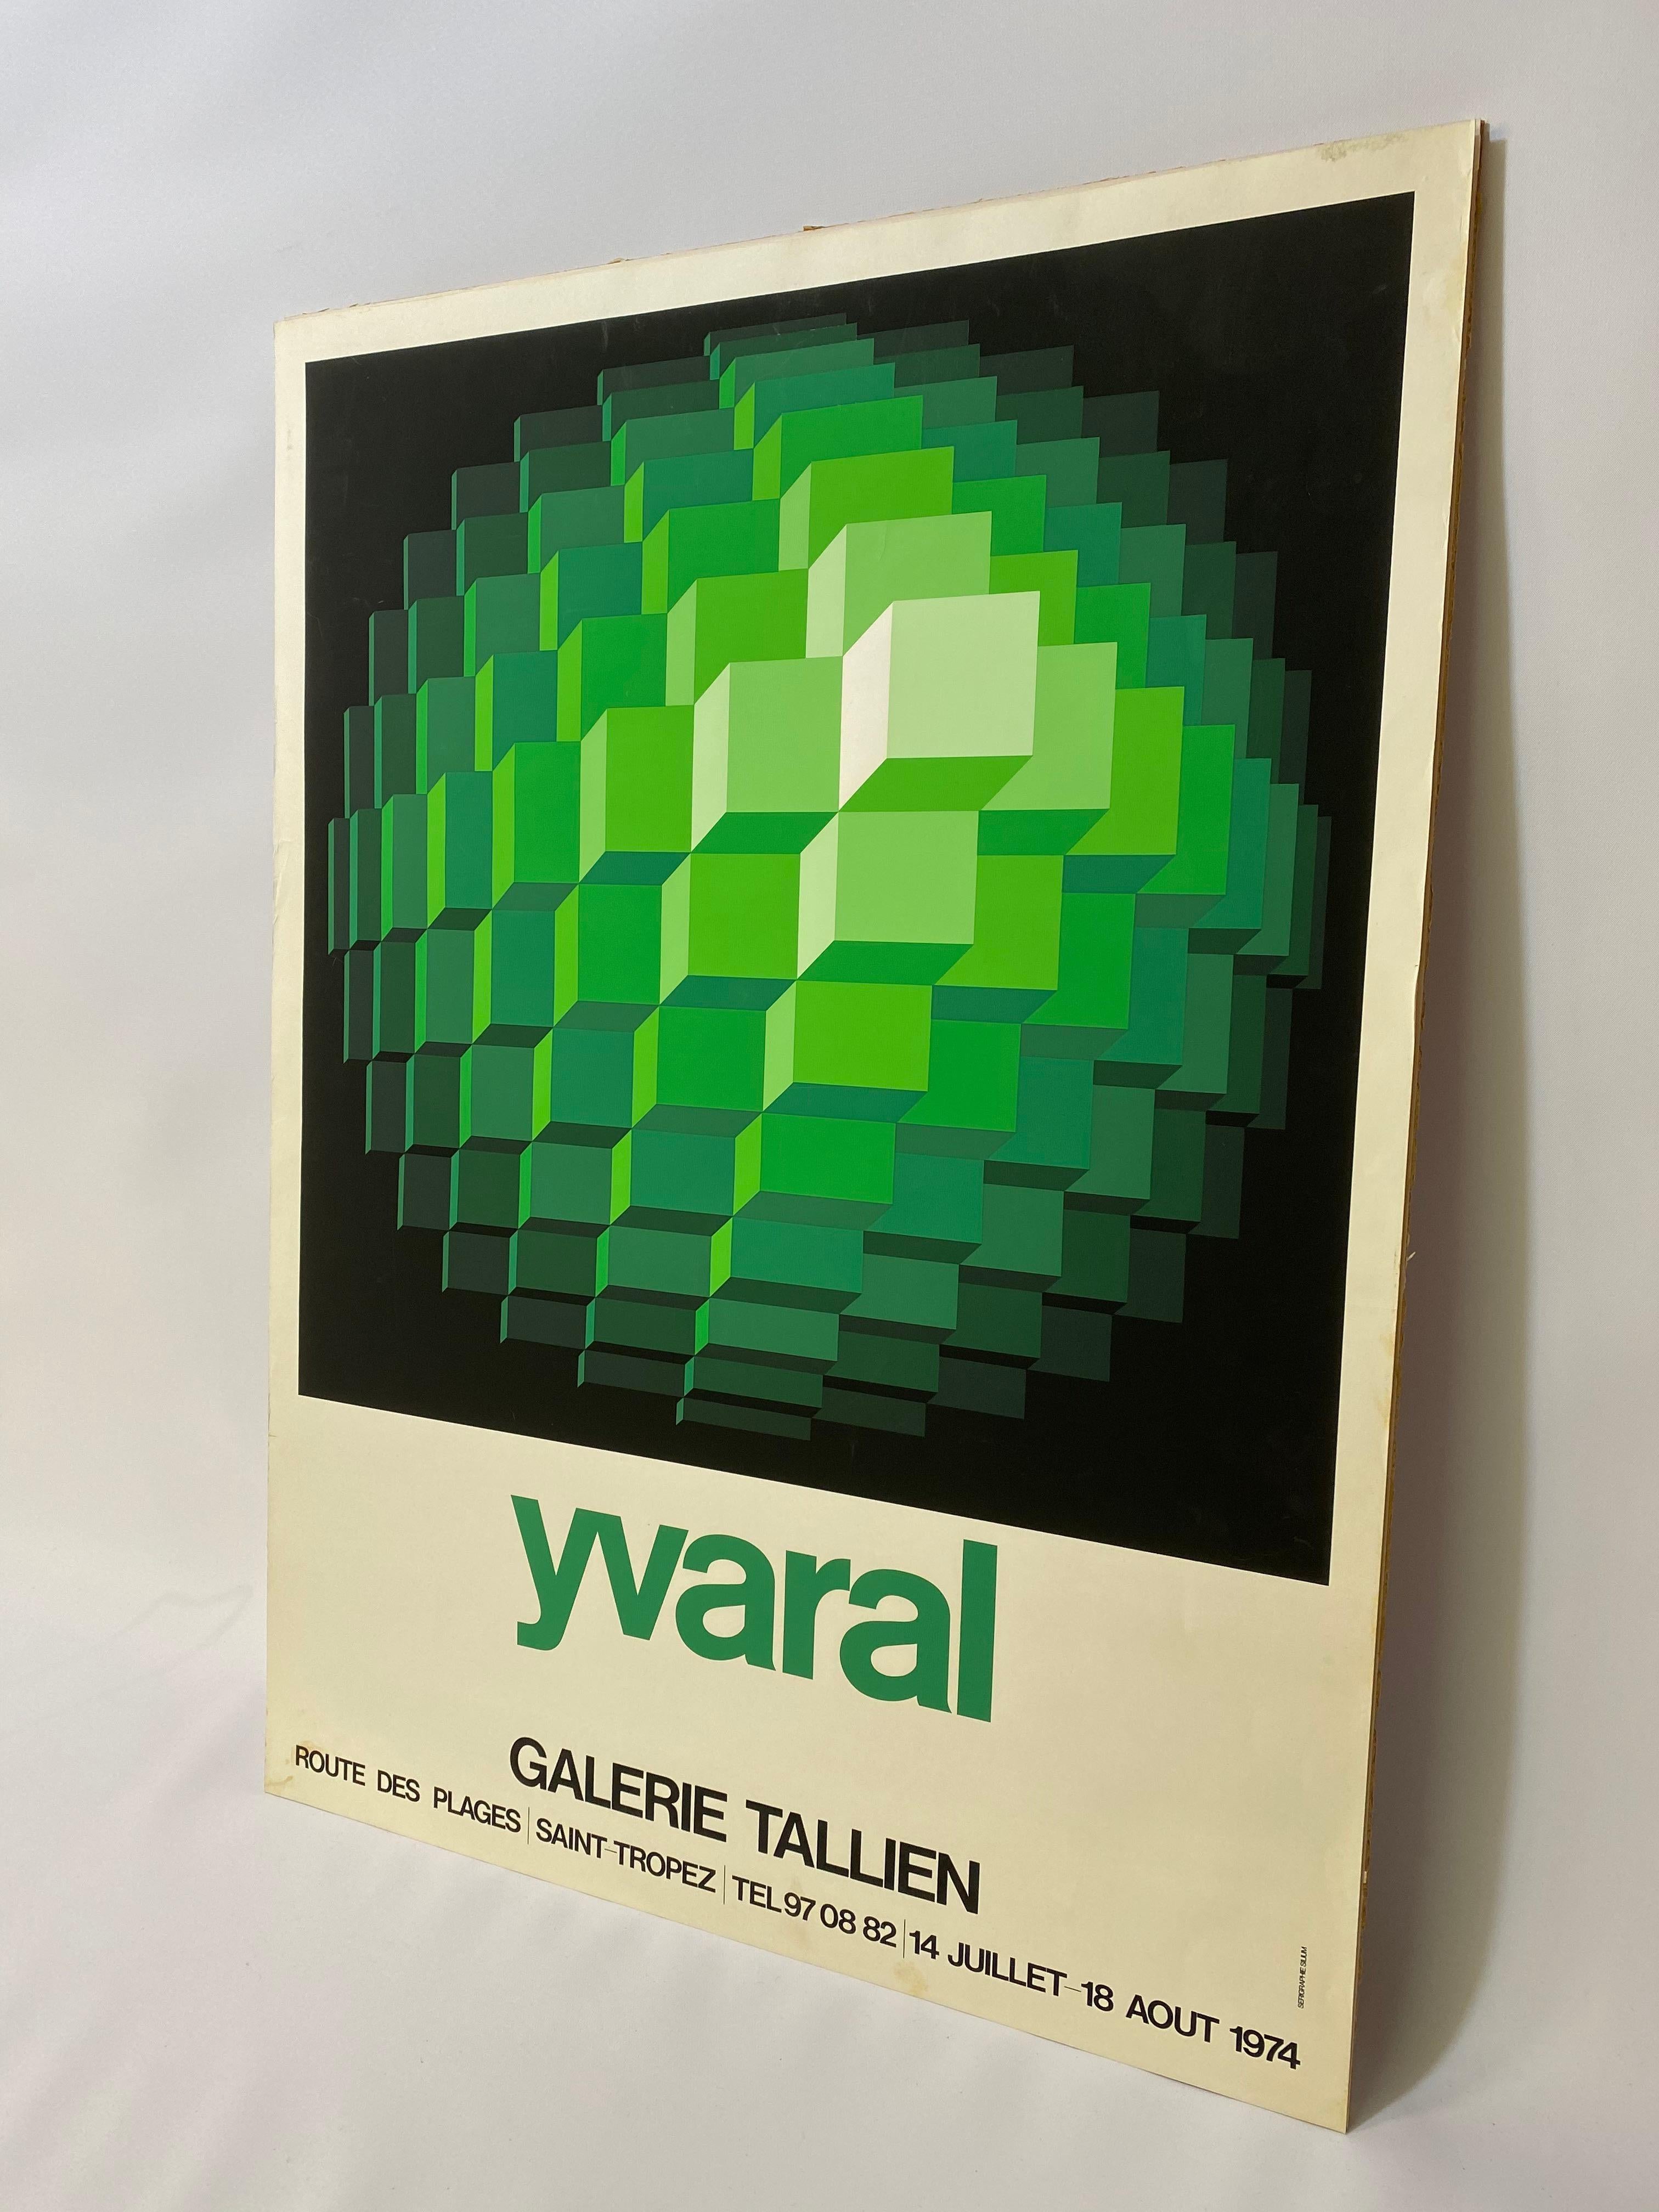 Post-Modern Vasarely Galerie Tallien 1974 Serigraph Exhibition Poster